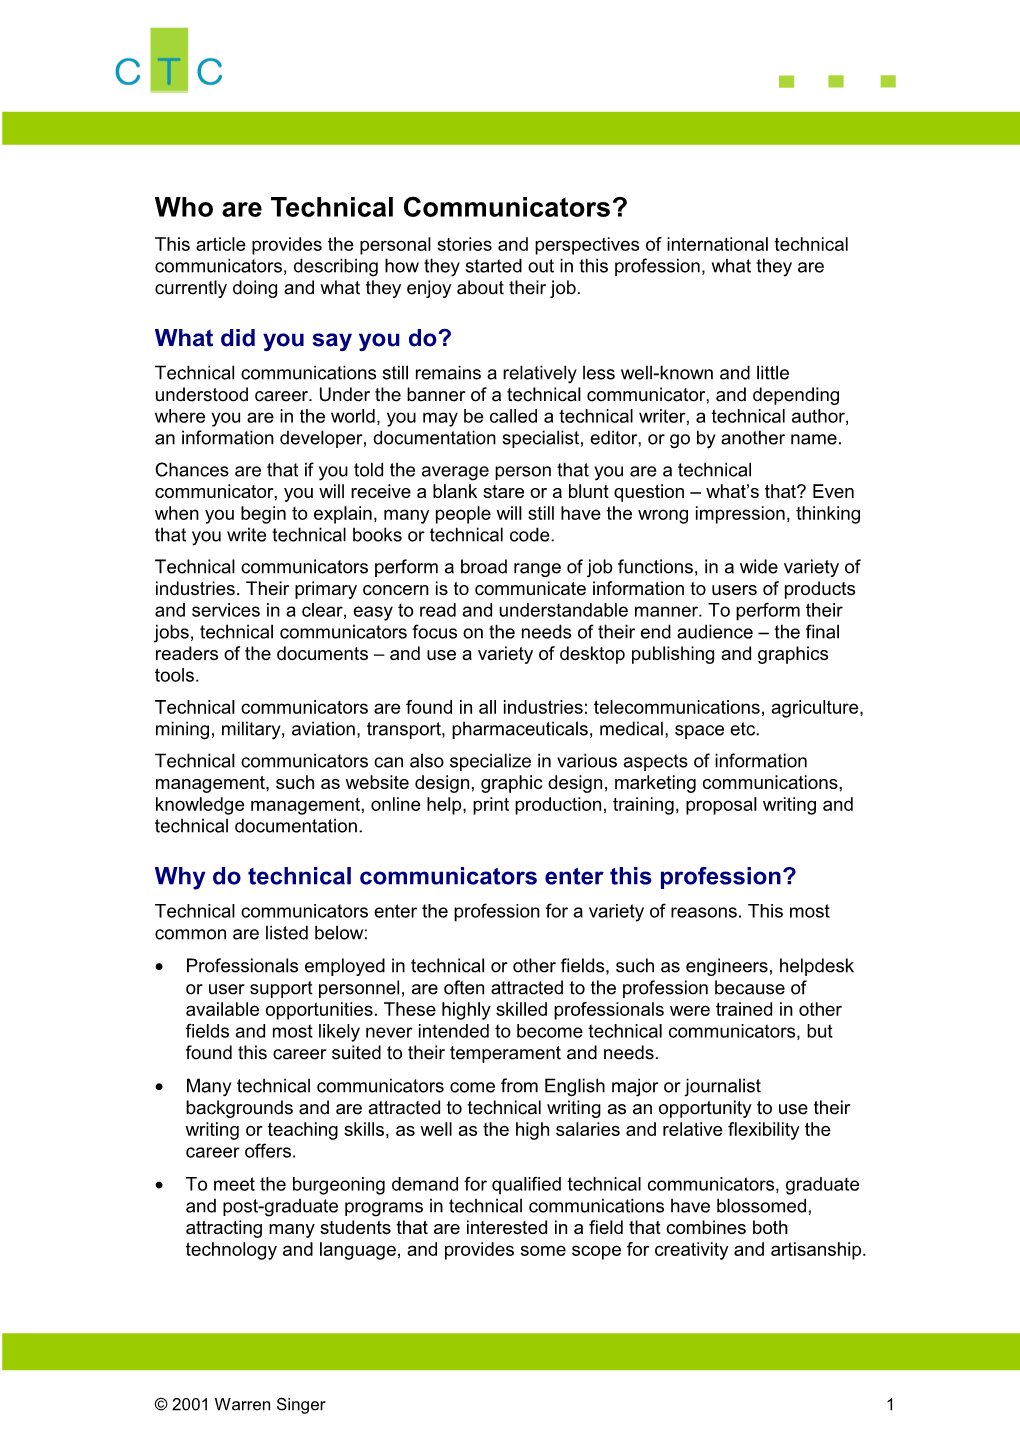 Who Are Technical Communicators?